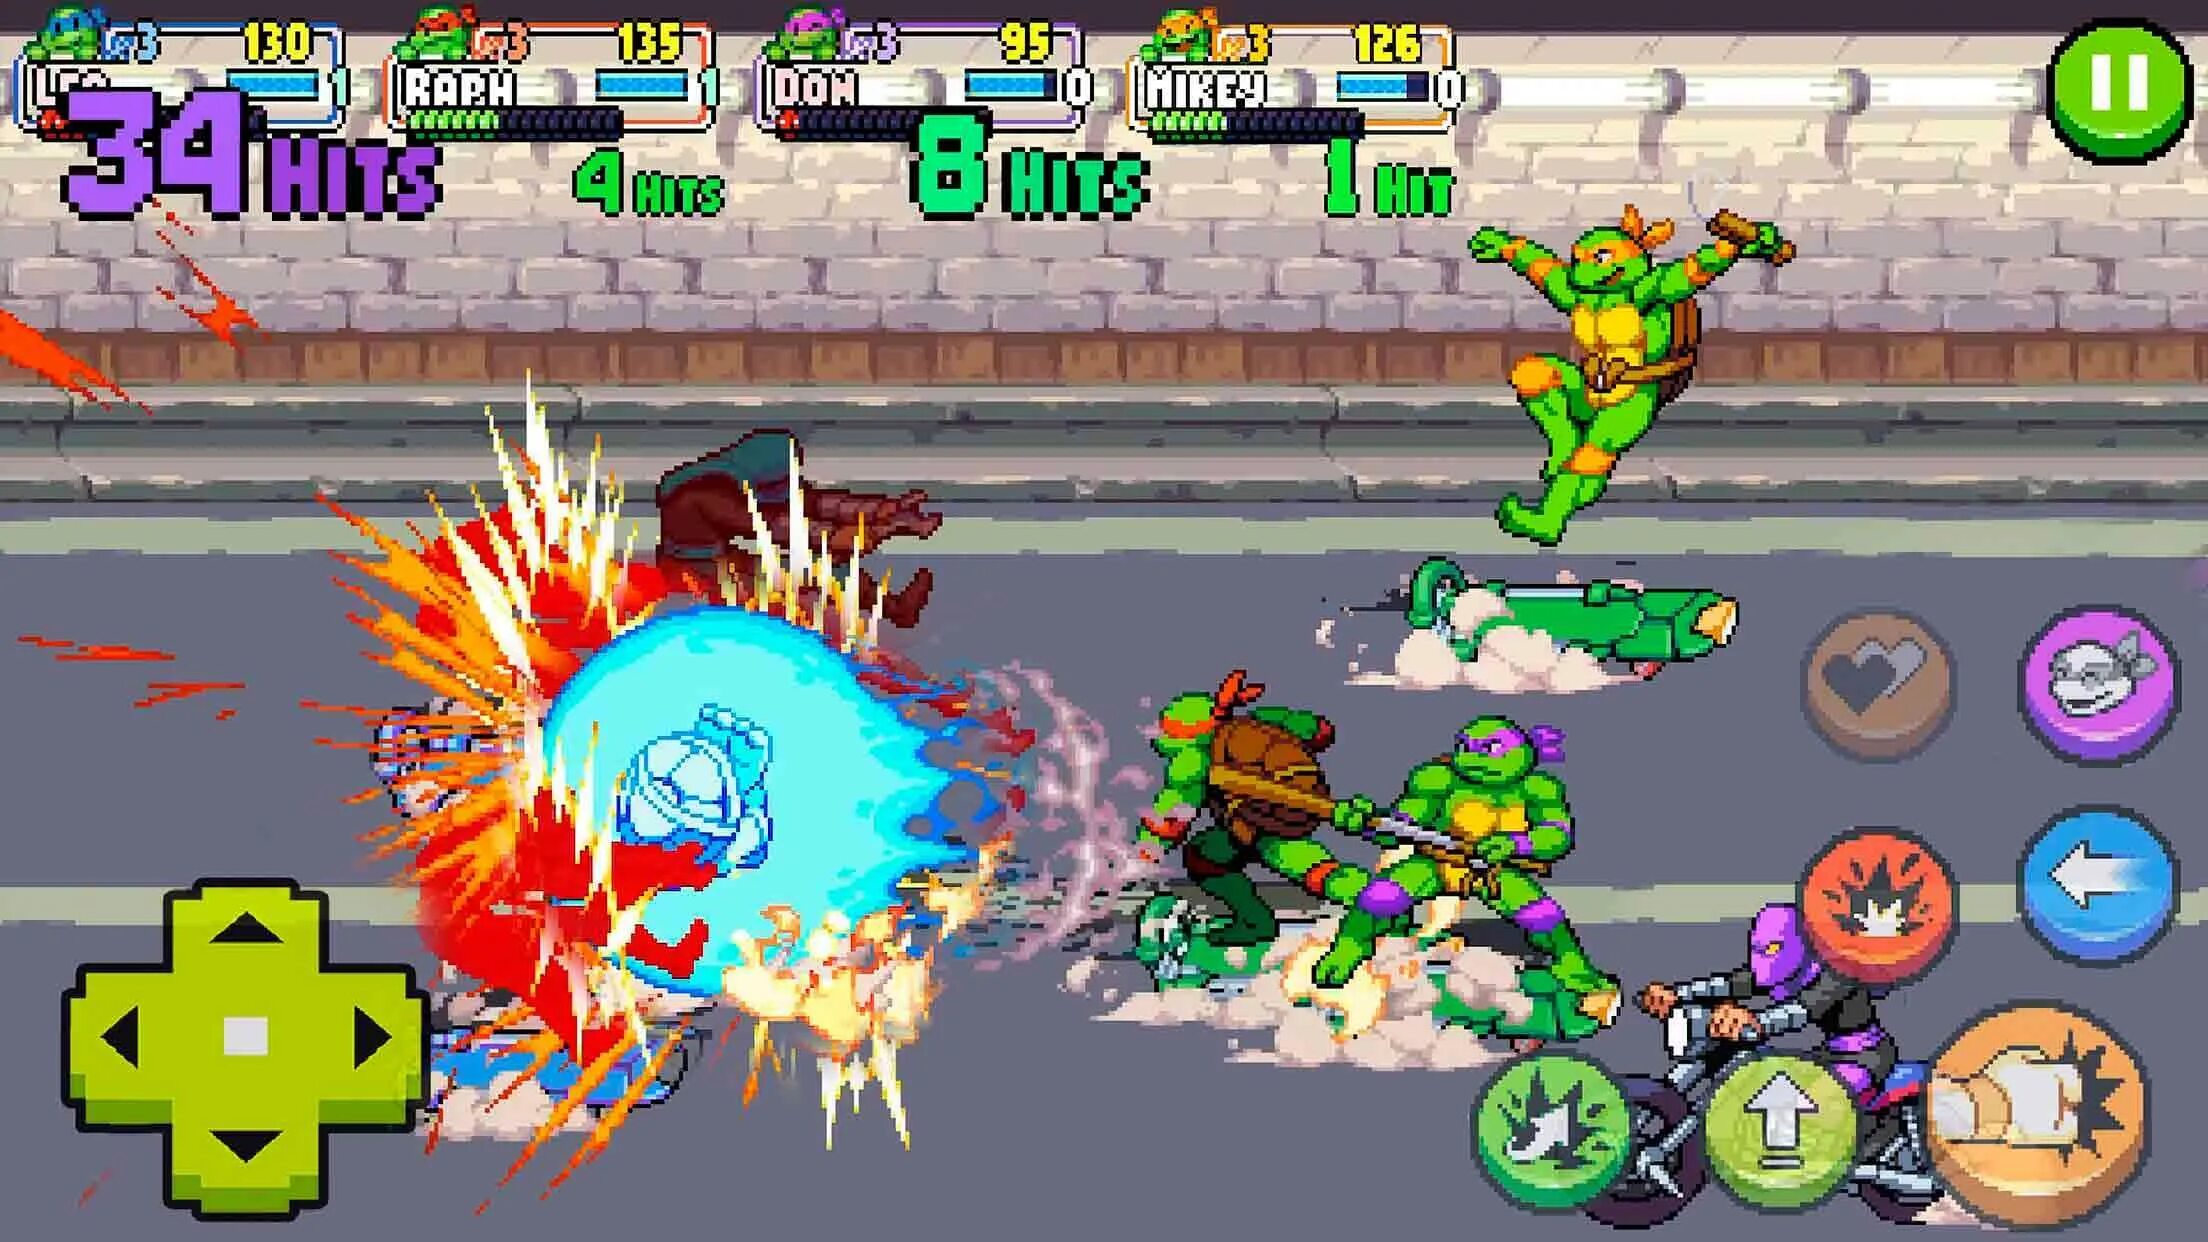 TMNT Shredder Revenge. Teenage Mutant Ninja Turtles (игра, 2003). TMNT Mutant Mayhem Shredder. Черепашки ниндзя игра на Икс бокс. Tmnt revenge android